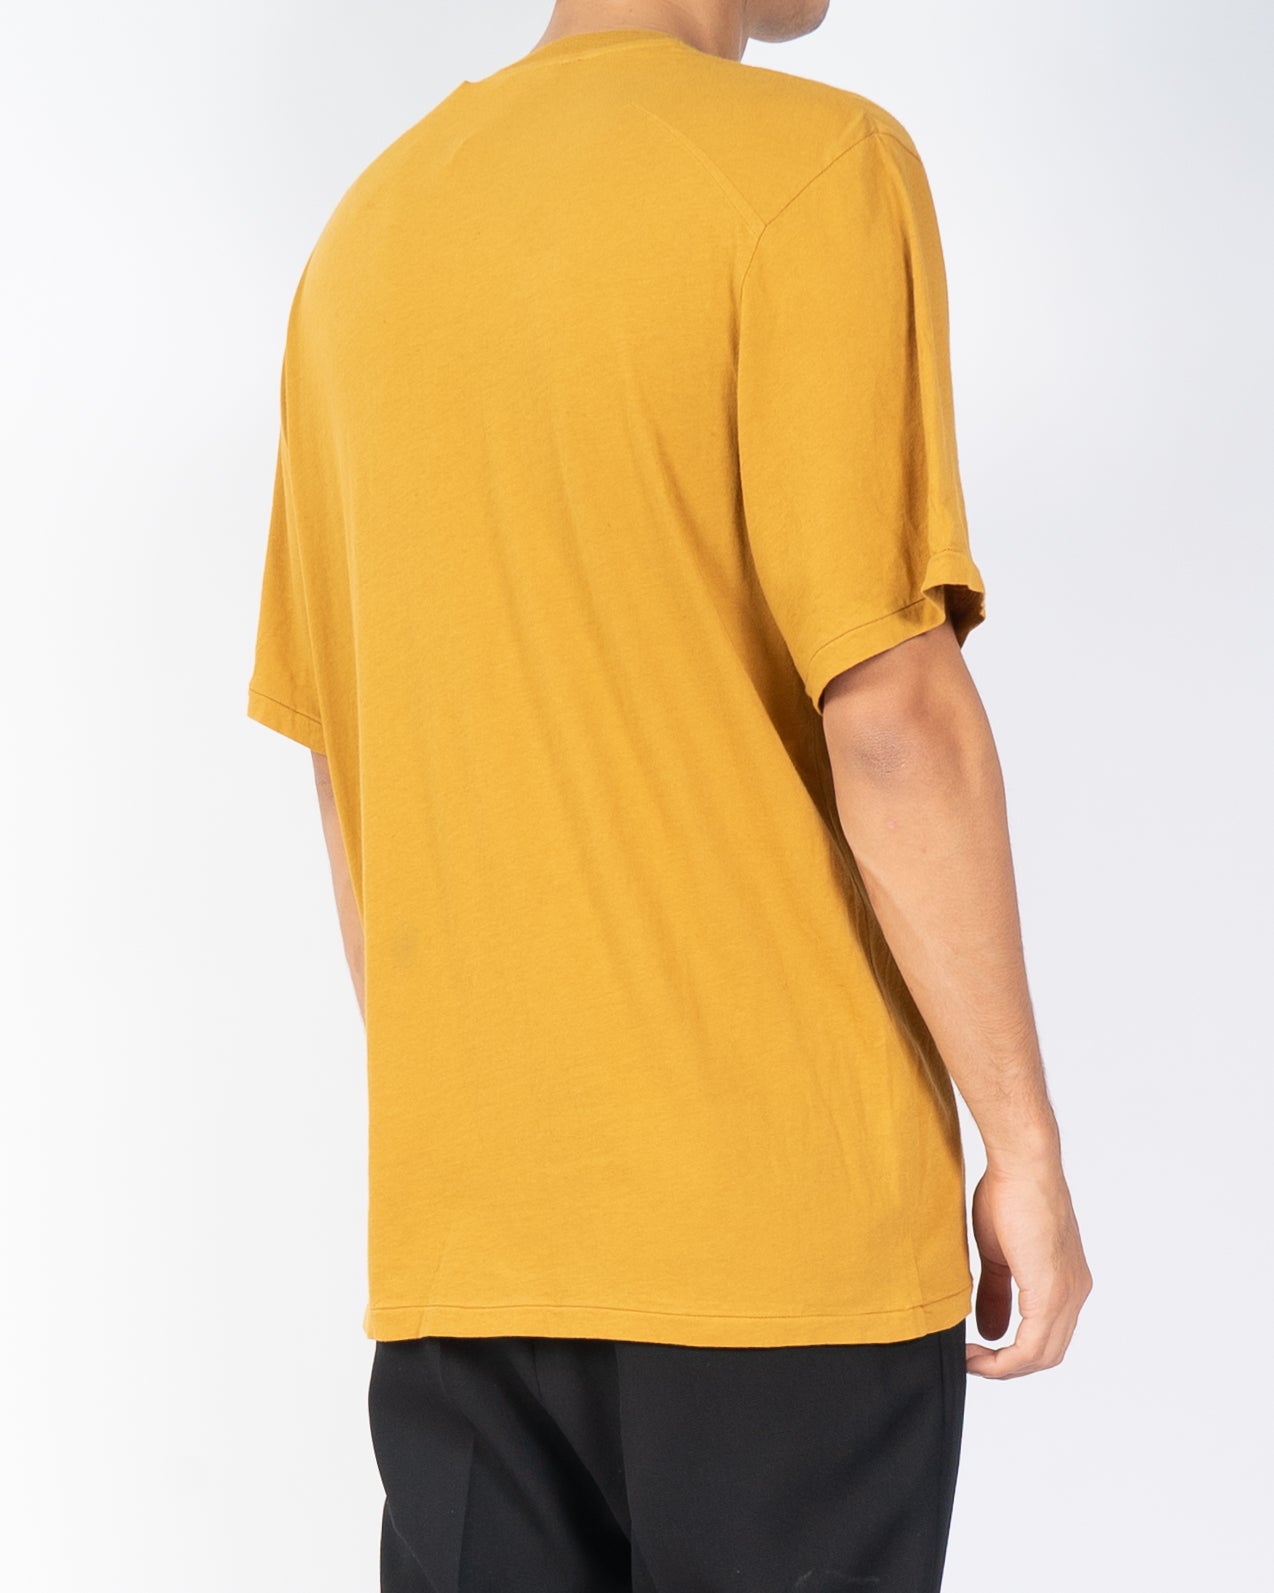 FW17 Yellow Printed T-Shirt Sample